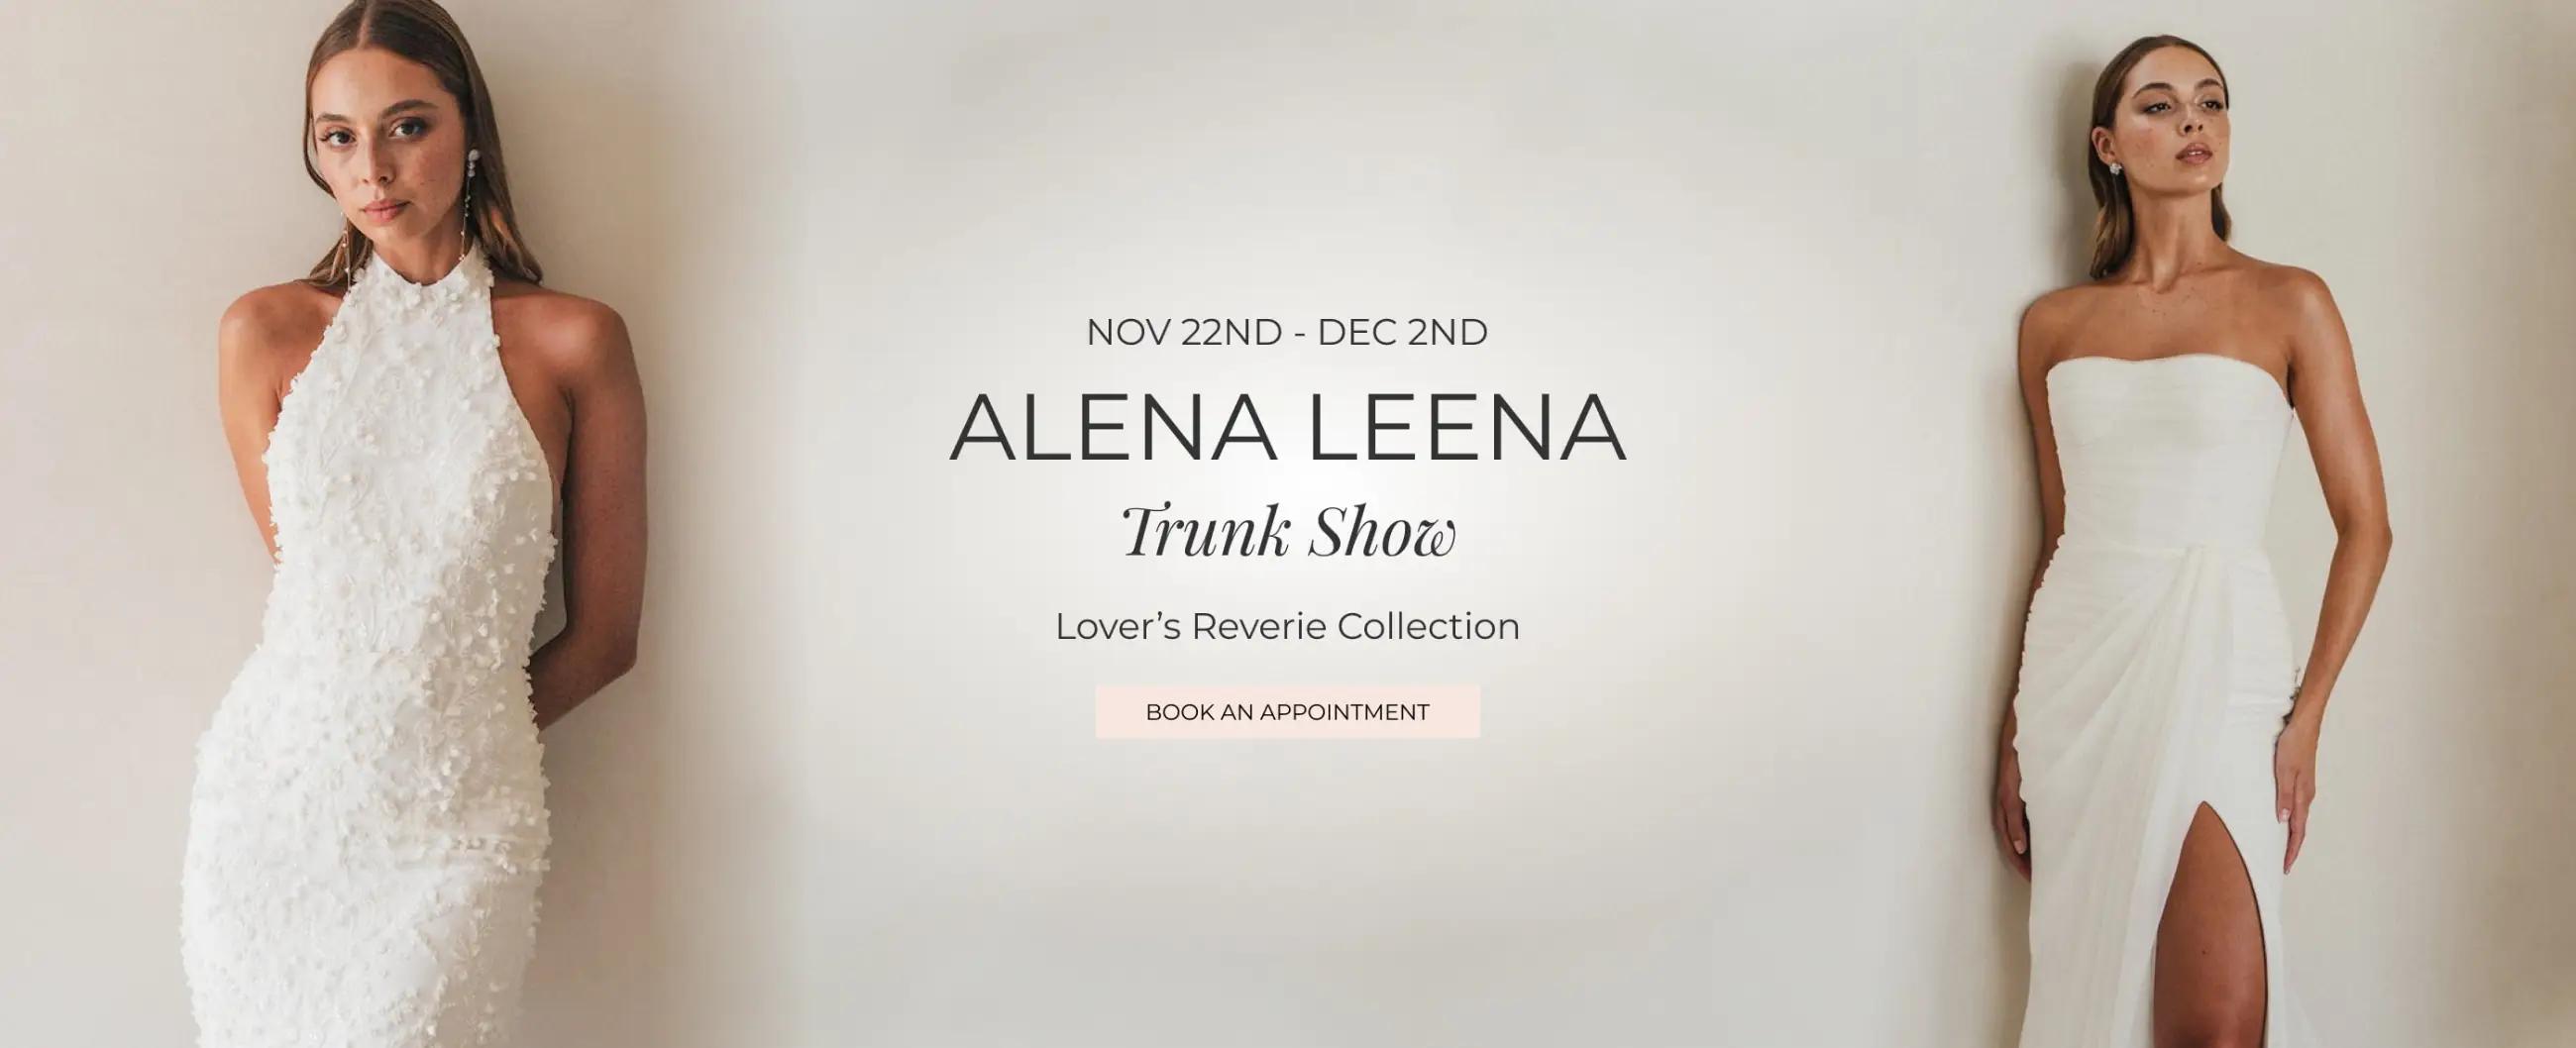 Alena Leena Trunk Show Banner Desktop